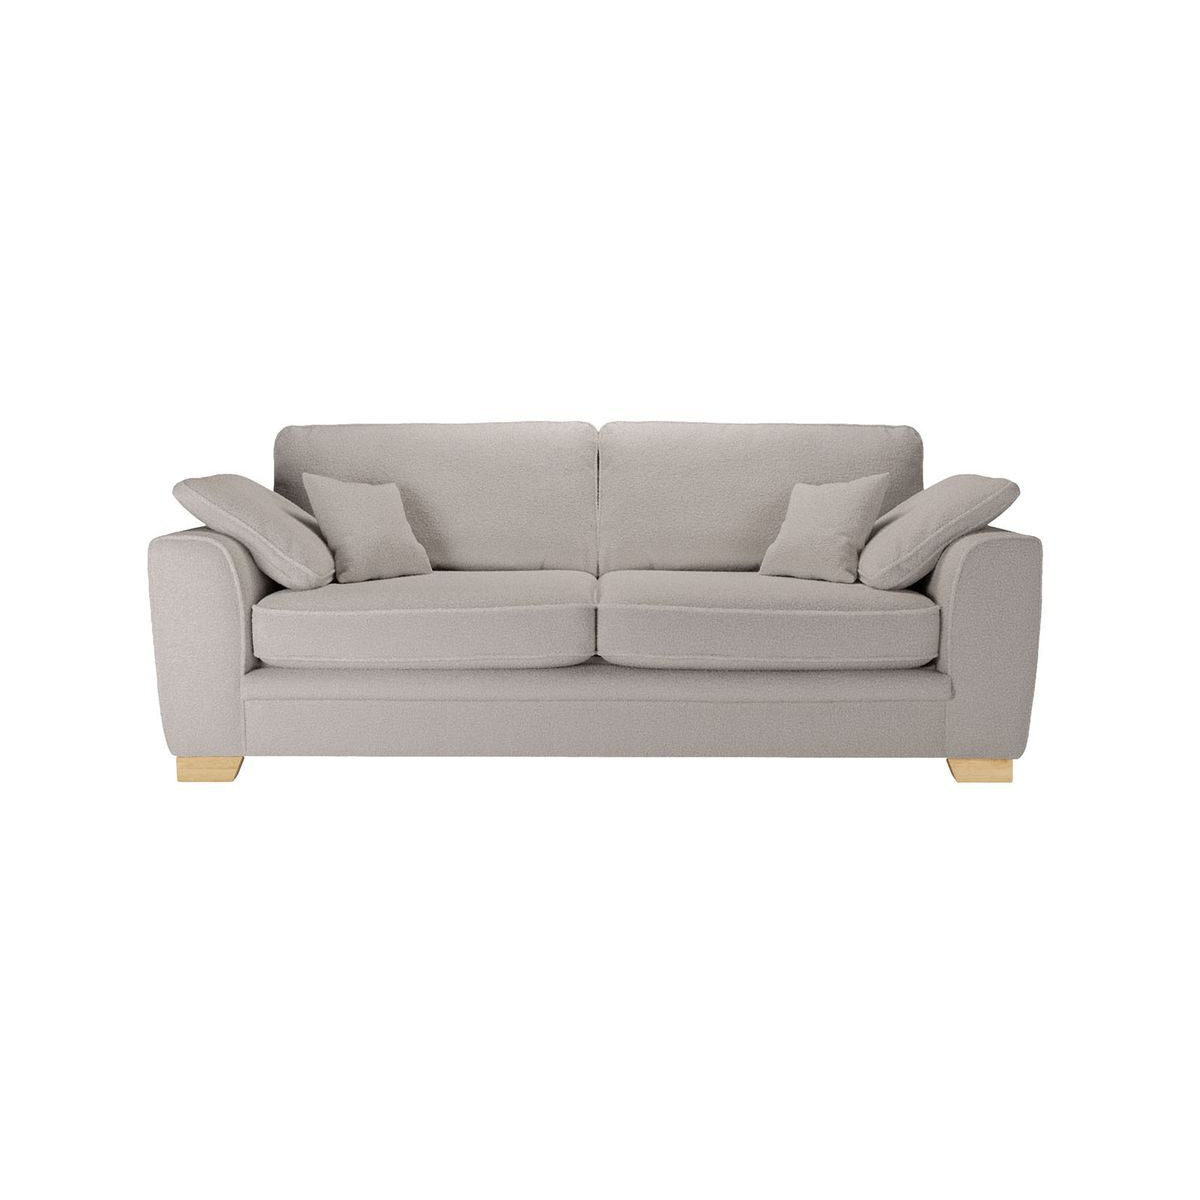 Ronay 3-seater Sofa, boucle brown, Leg colour: like oak - image 1